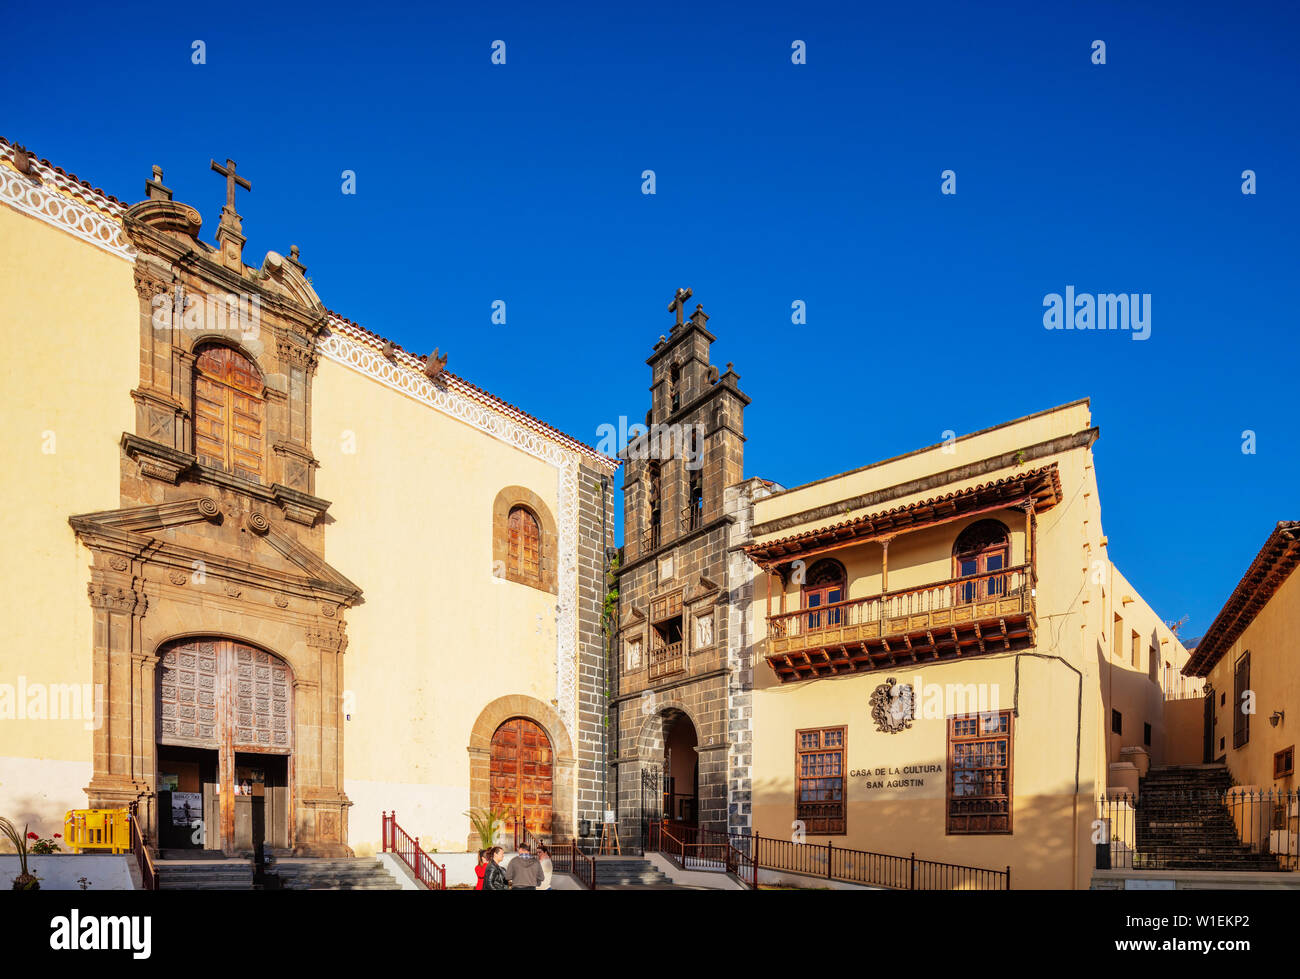 Die katholische Kirche von San Augustin, La Orotava, Teneriffa, Kanarische Inseln, Spanien, Atlantik, Europa Stockfoto